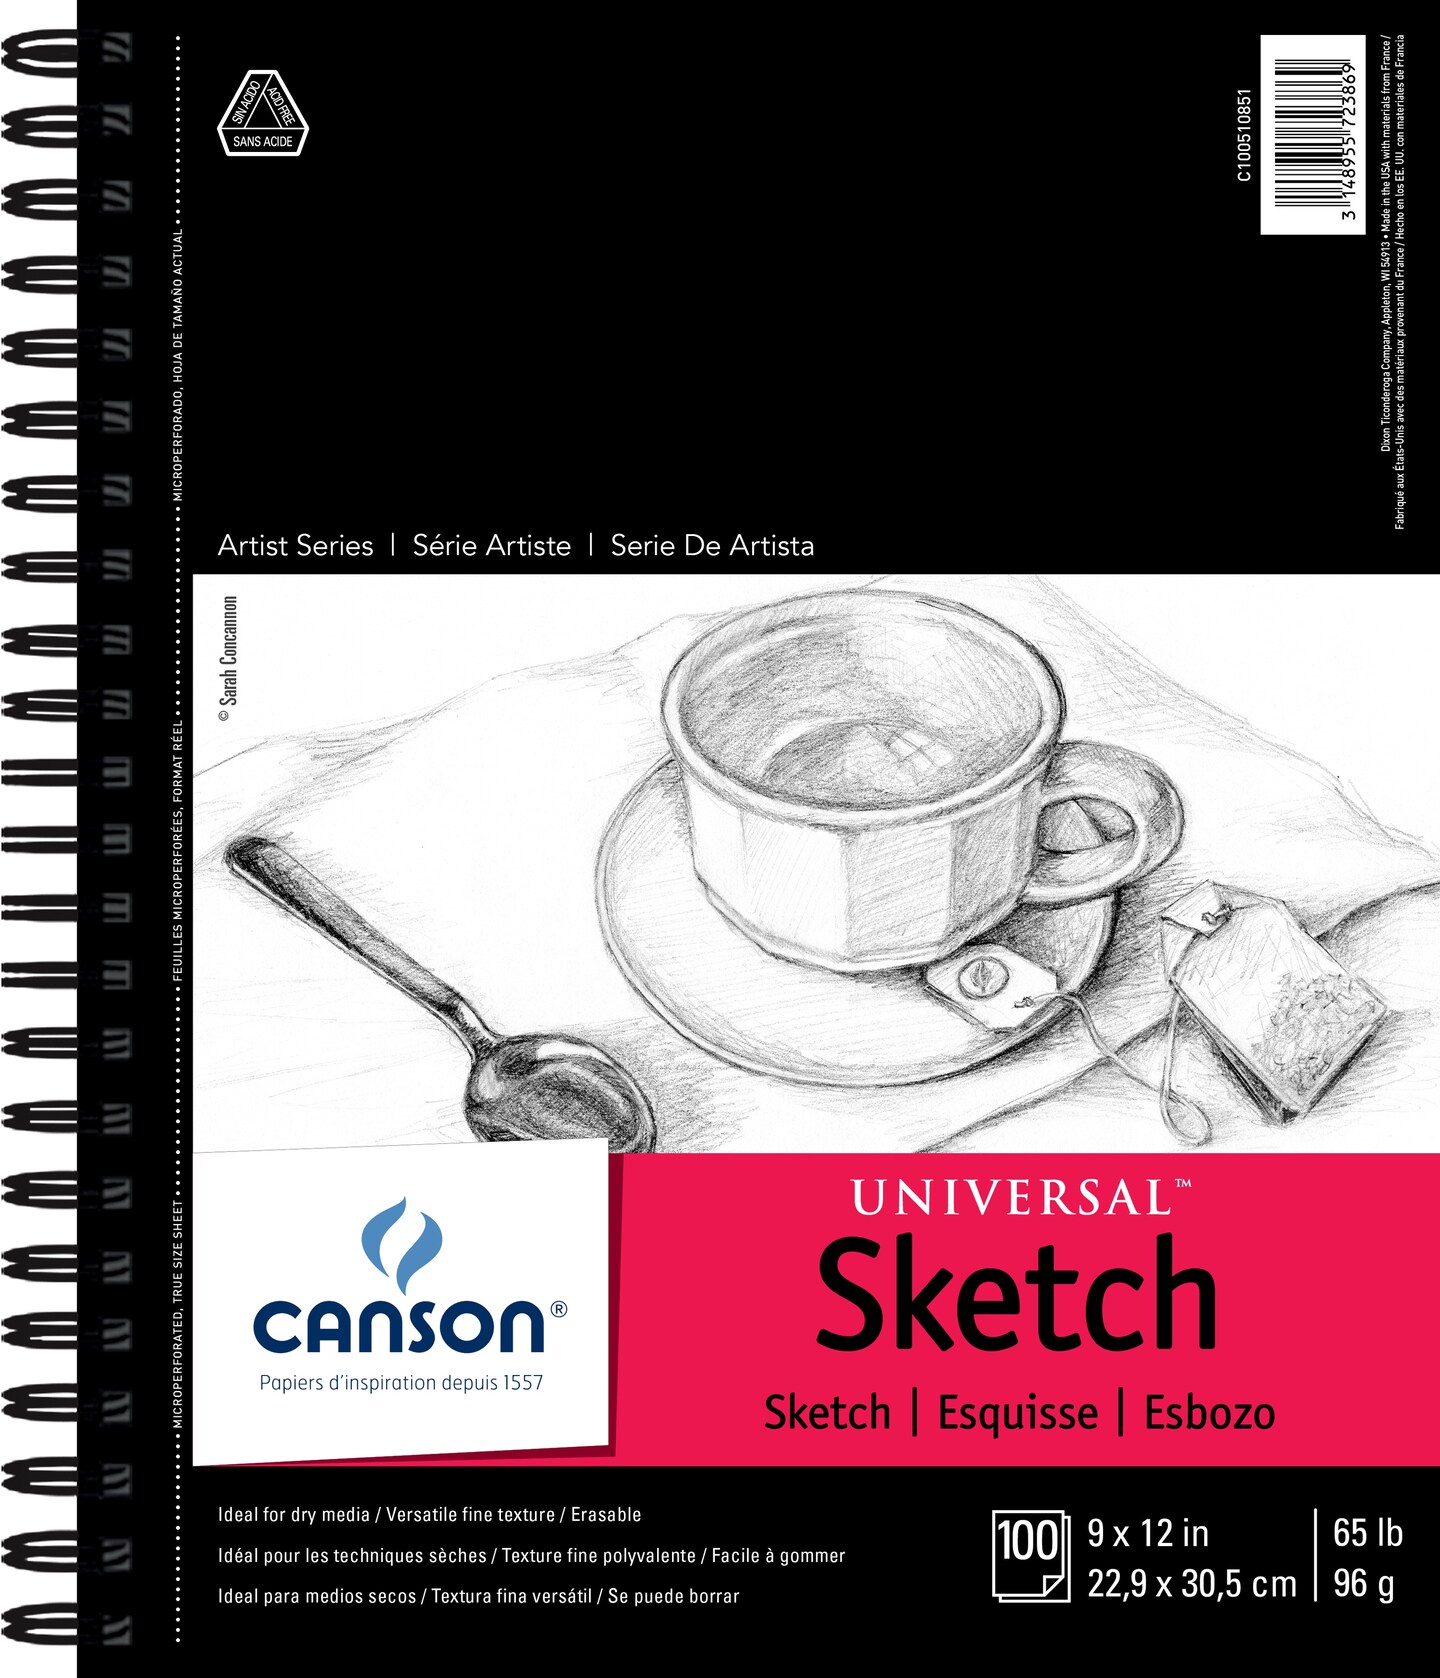 Canson Universal Spiral Sketch Book 9X12